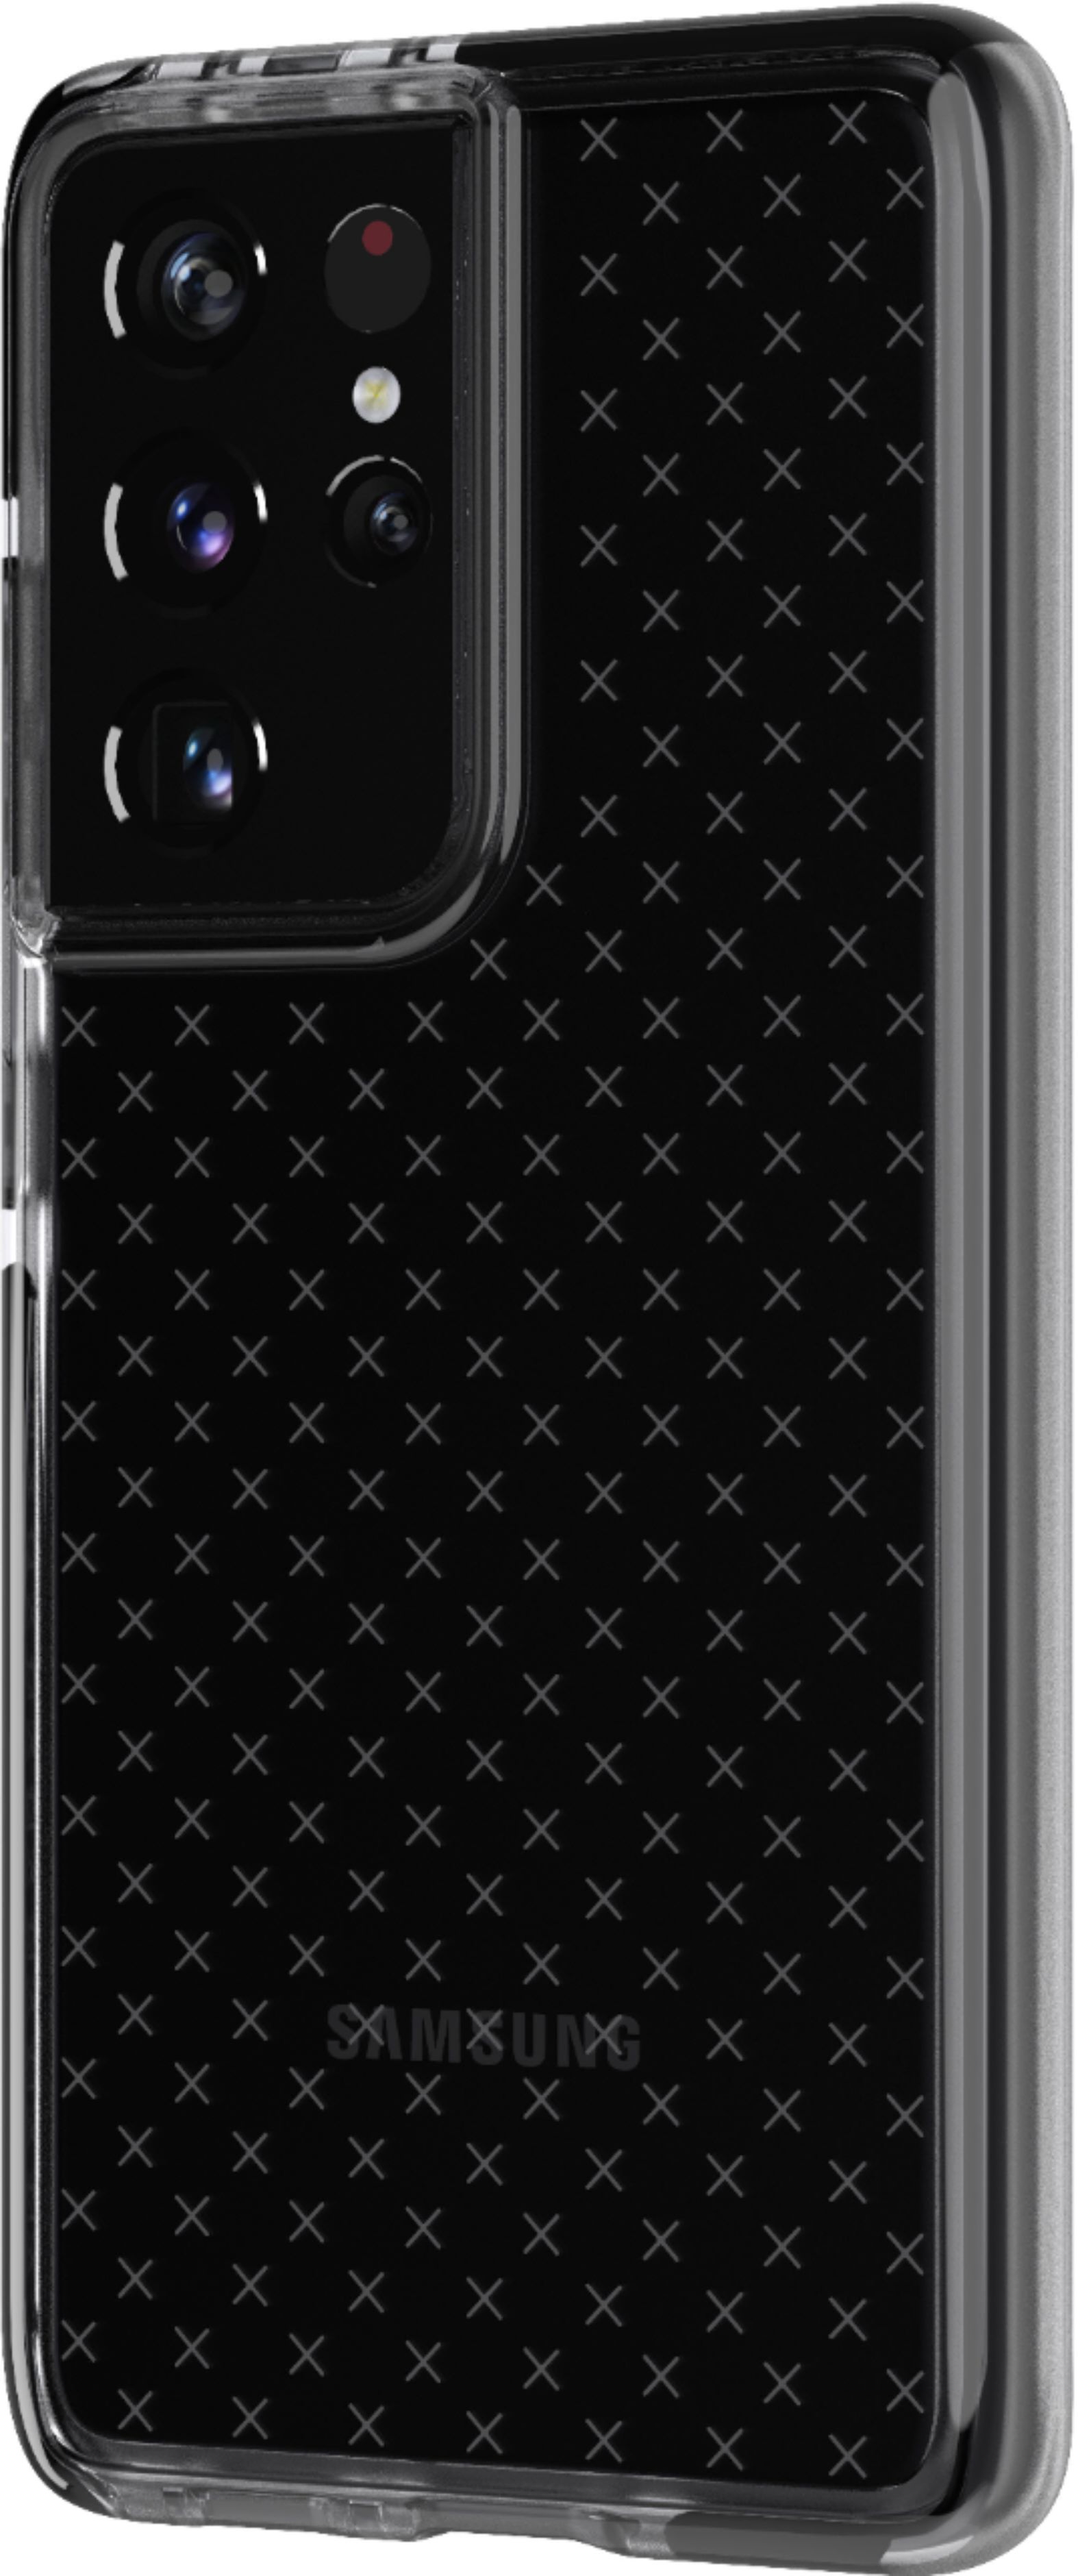 Samsung Galaxy S21 5G Evo Slim | Phone Case | Charcoal Black